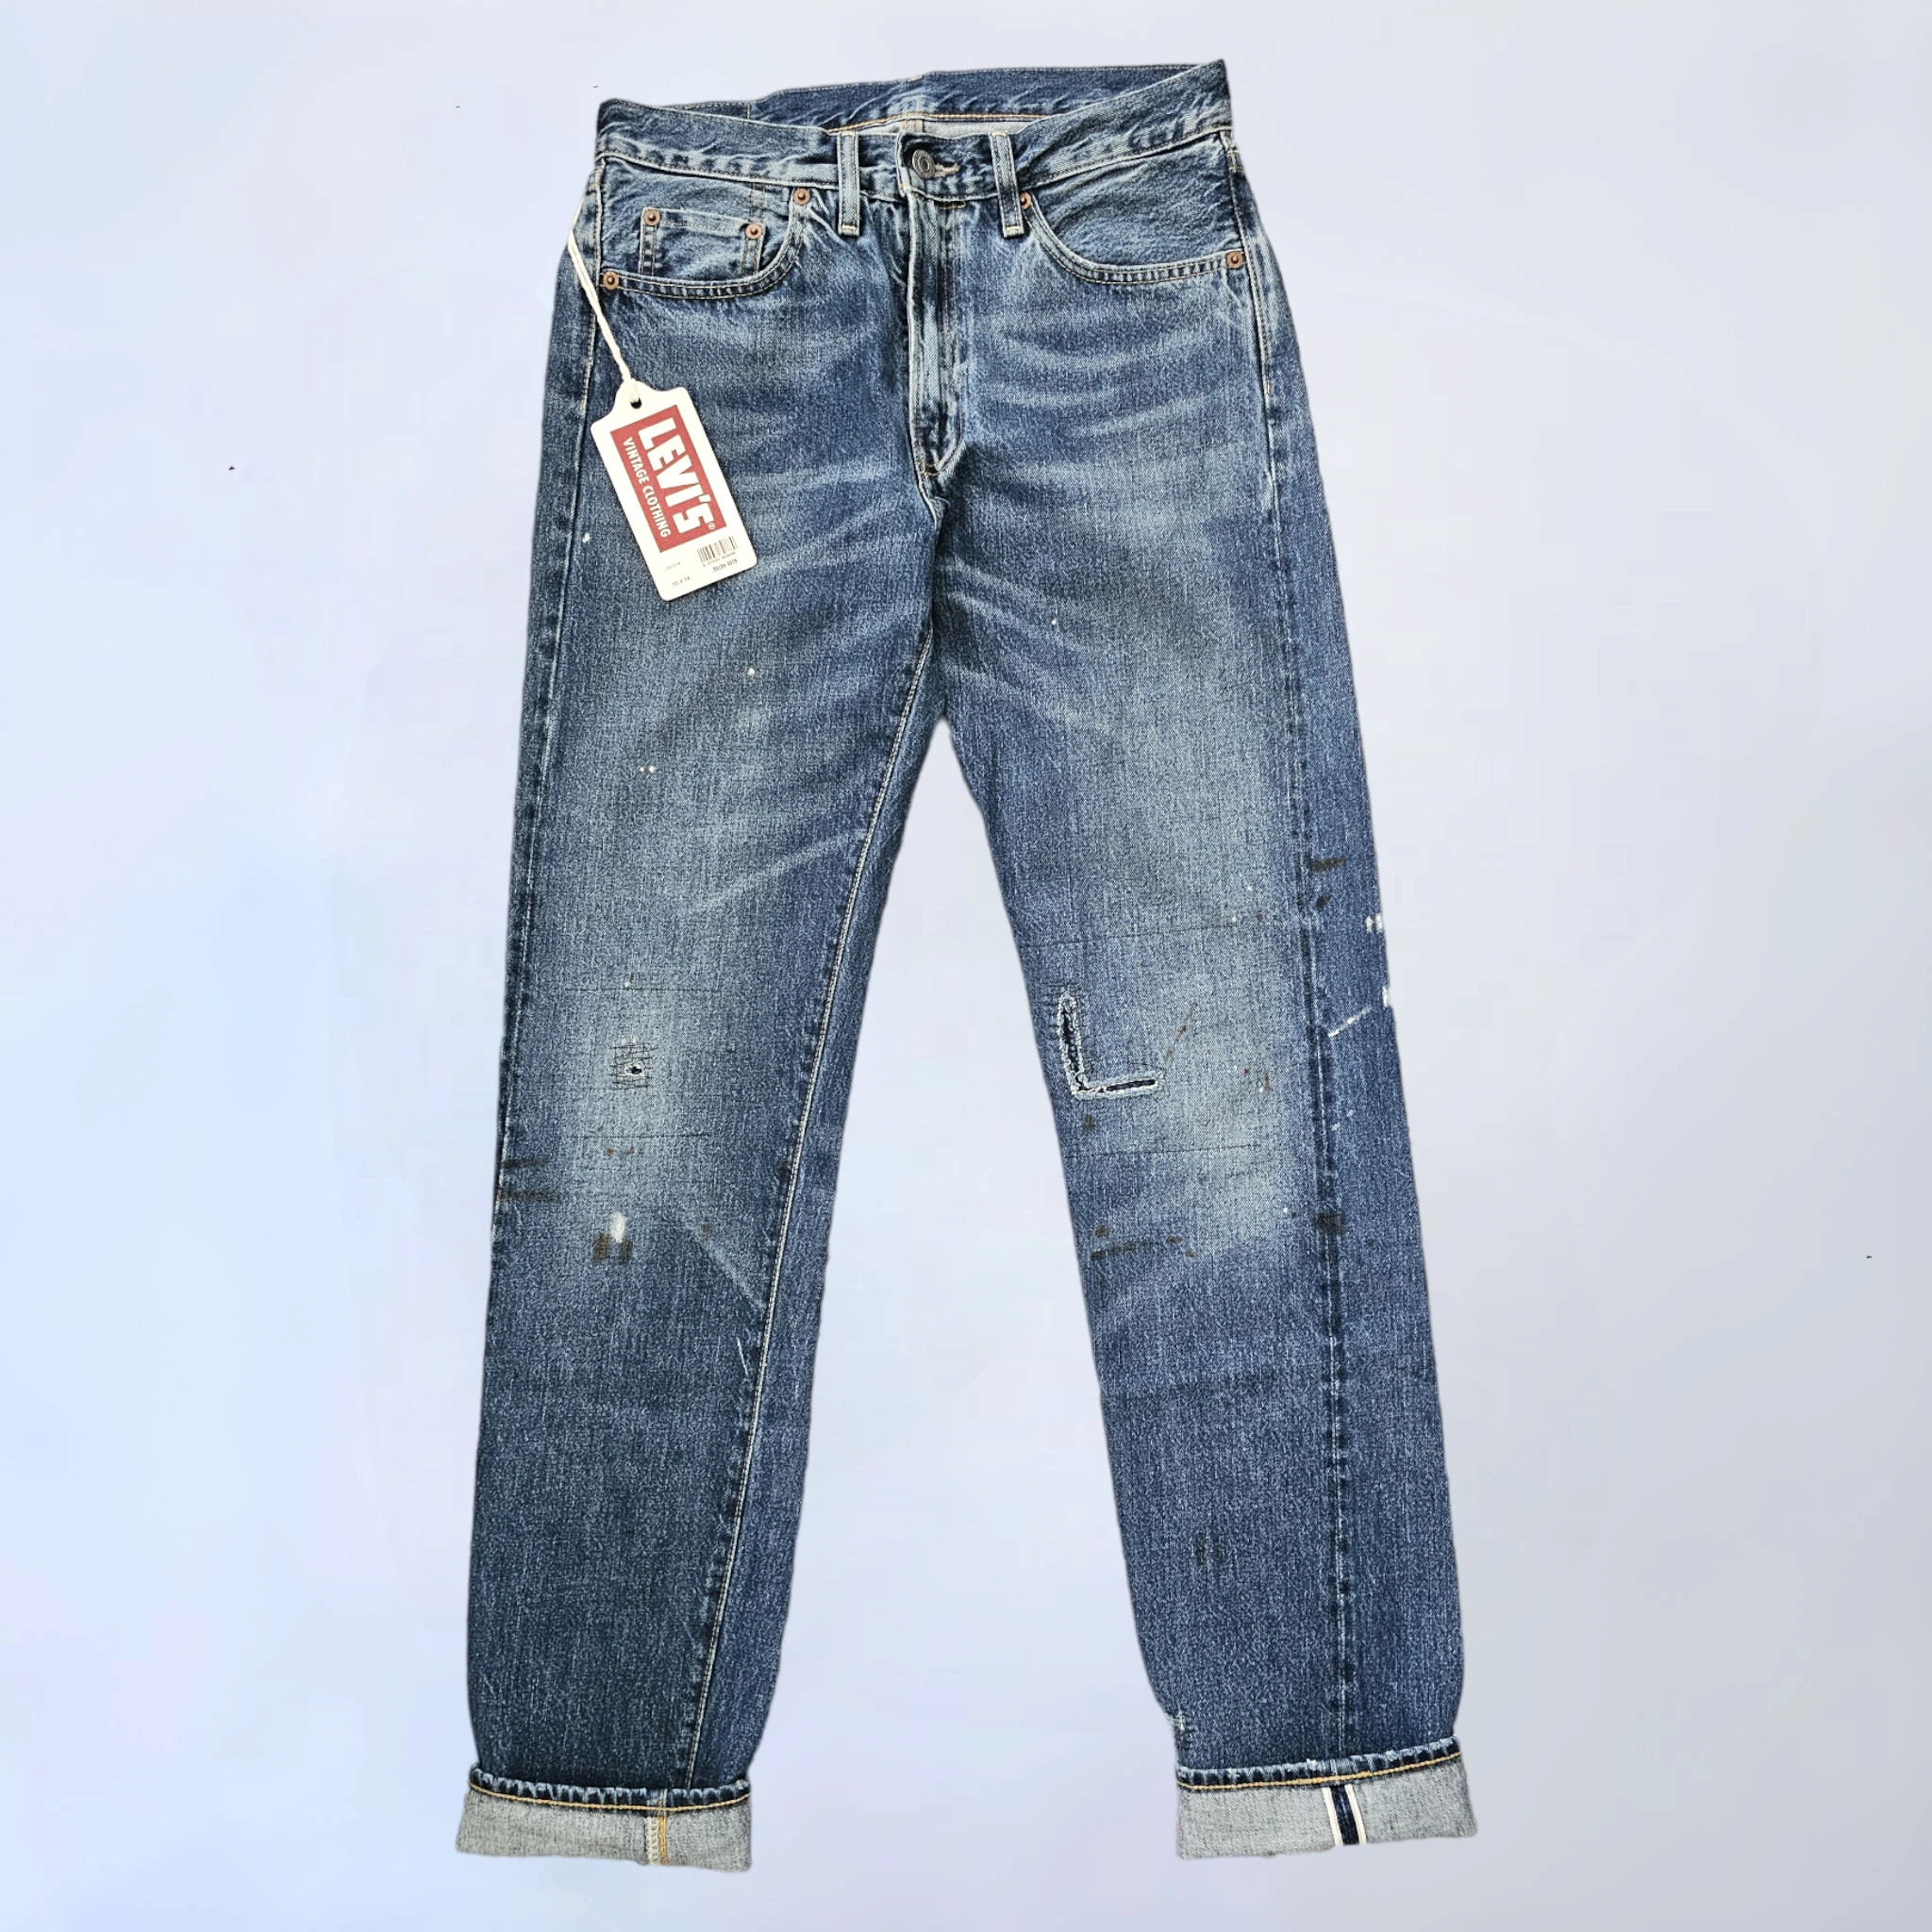 Levi's Men's 505 Workwear Fit Jeans, Medium Stonewash, 29Wx30L at